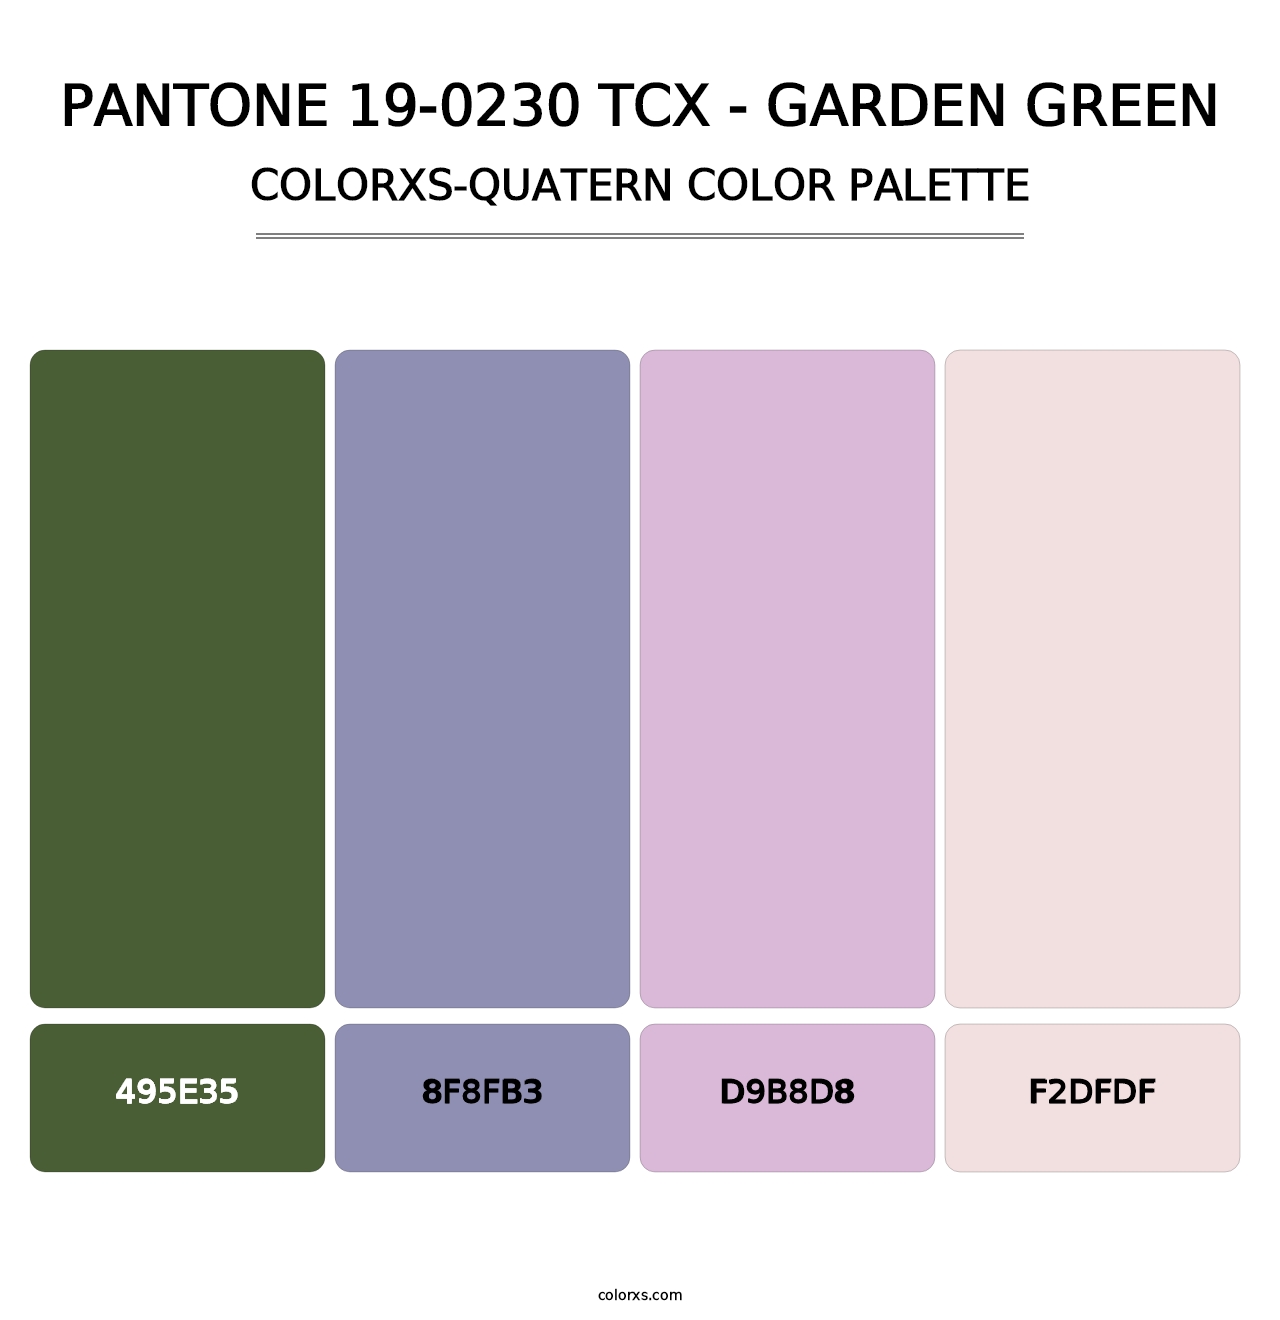 PANTONE 19-0230 TCX - Garden Green - Colorxs Quatern Palette